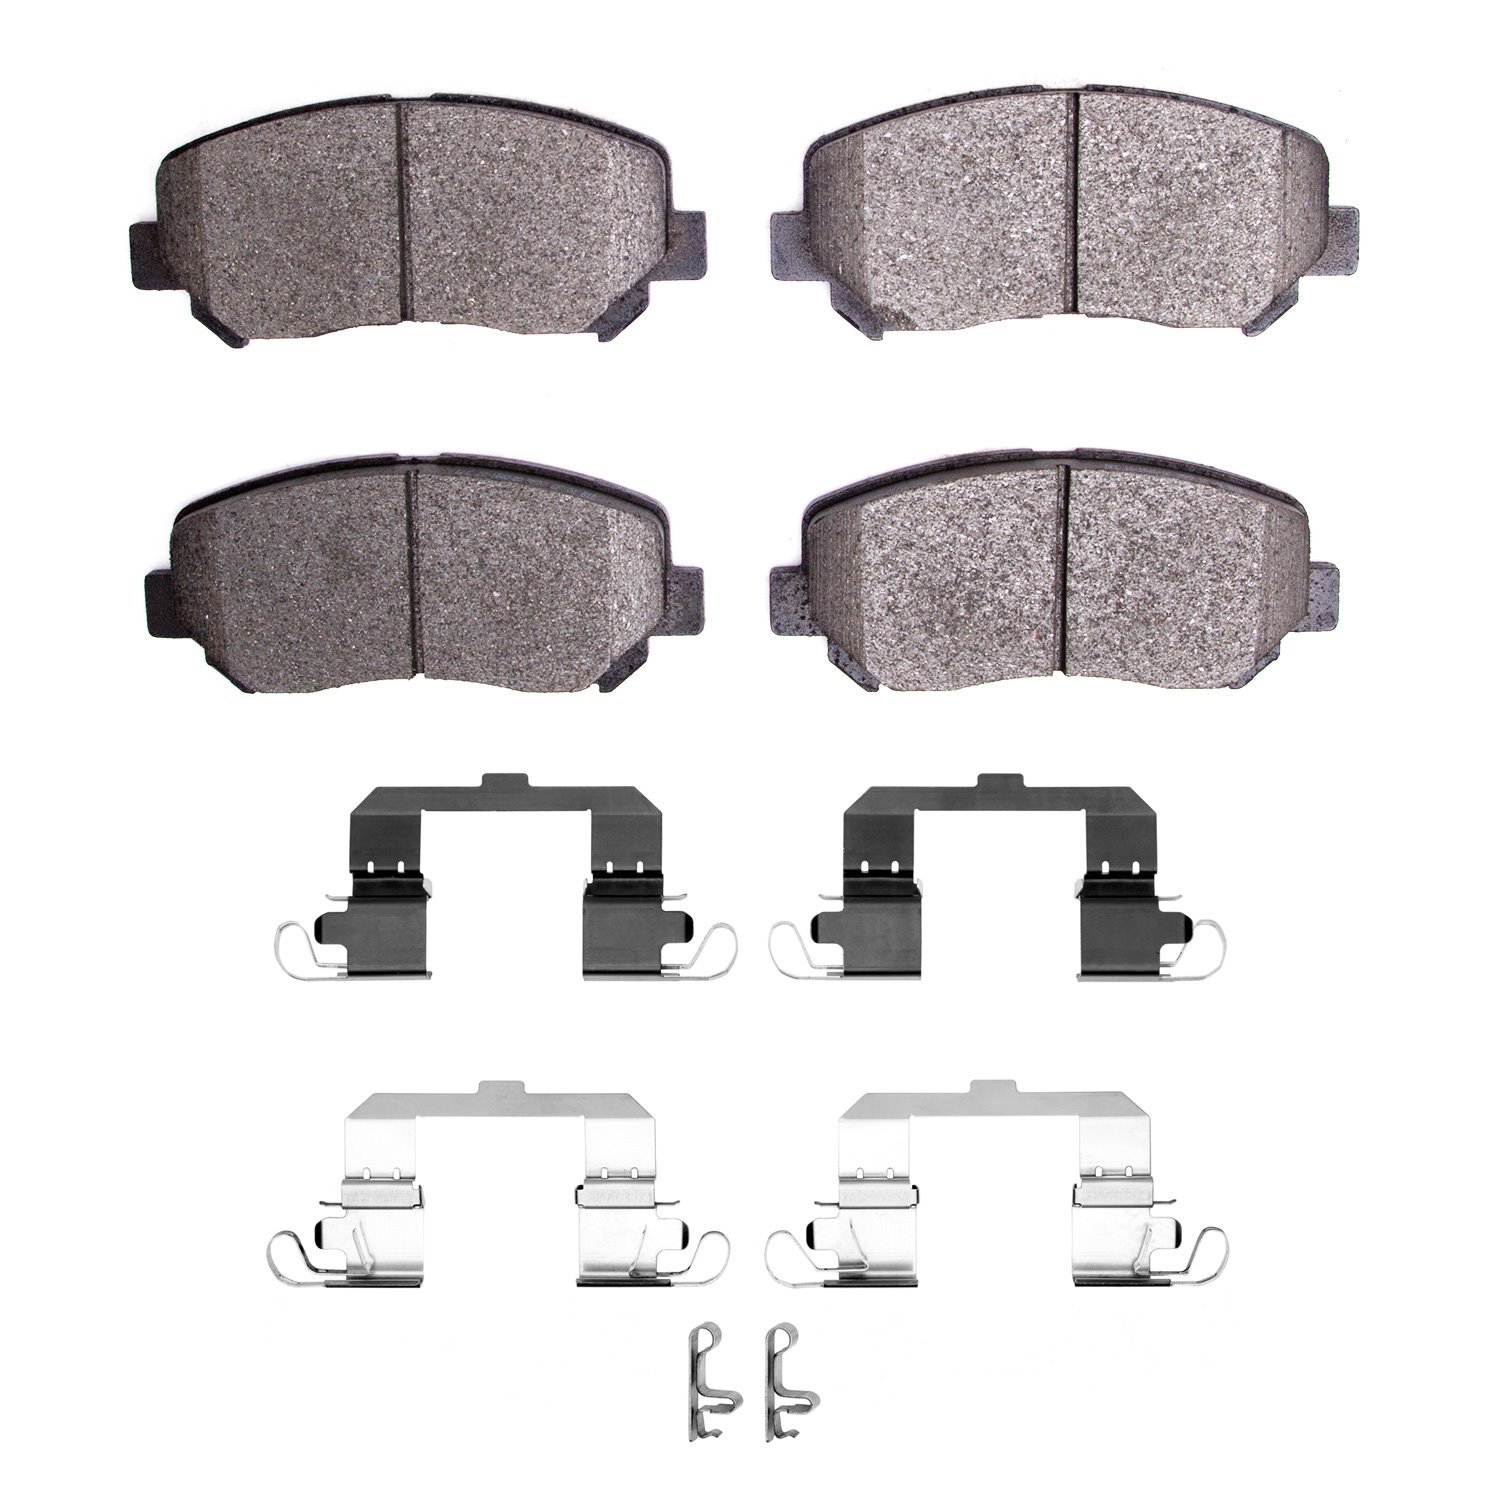 1310-1640-01 3000-Series Ceramic Brake Pads & Hardware Kit, 2013-2016 Mopar, Position: Front